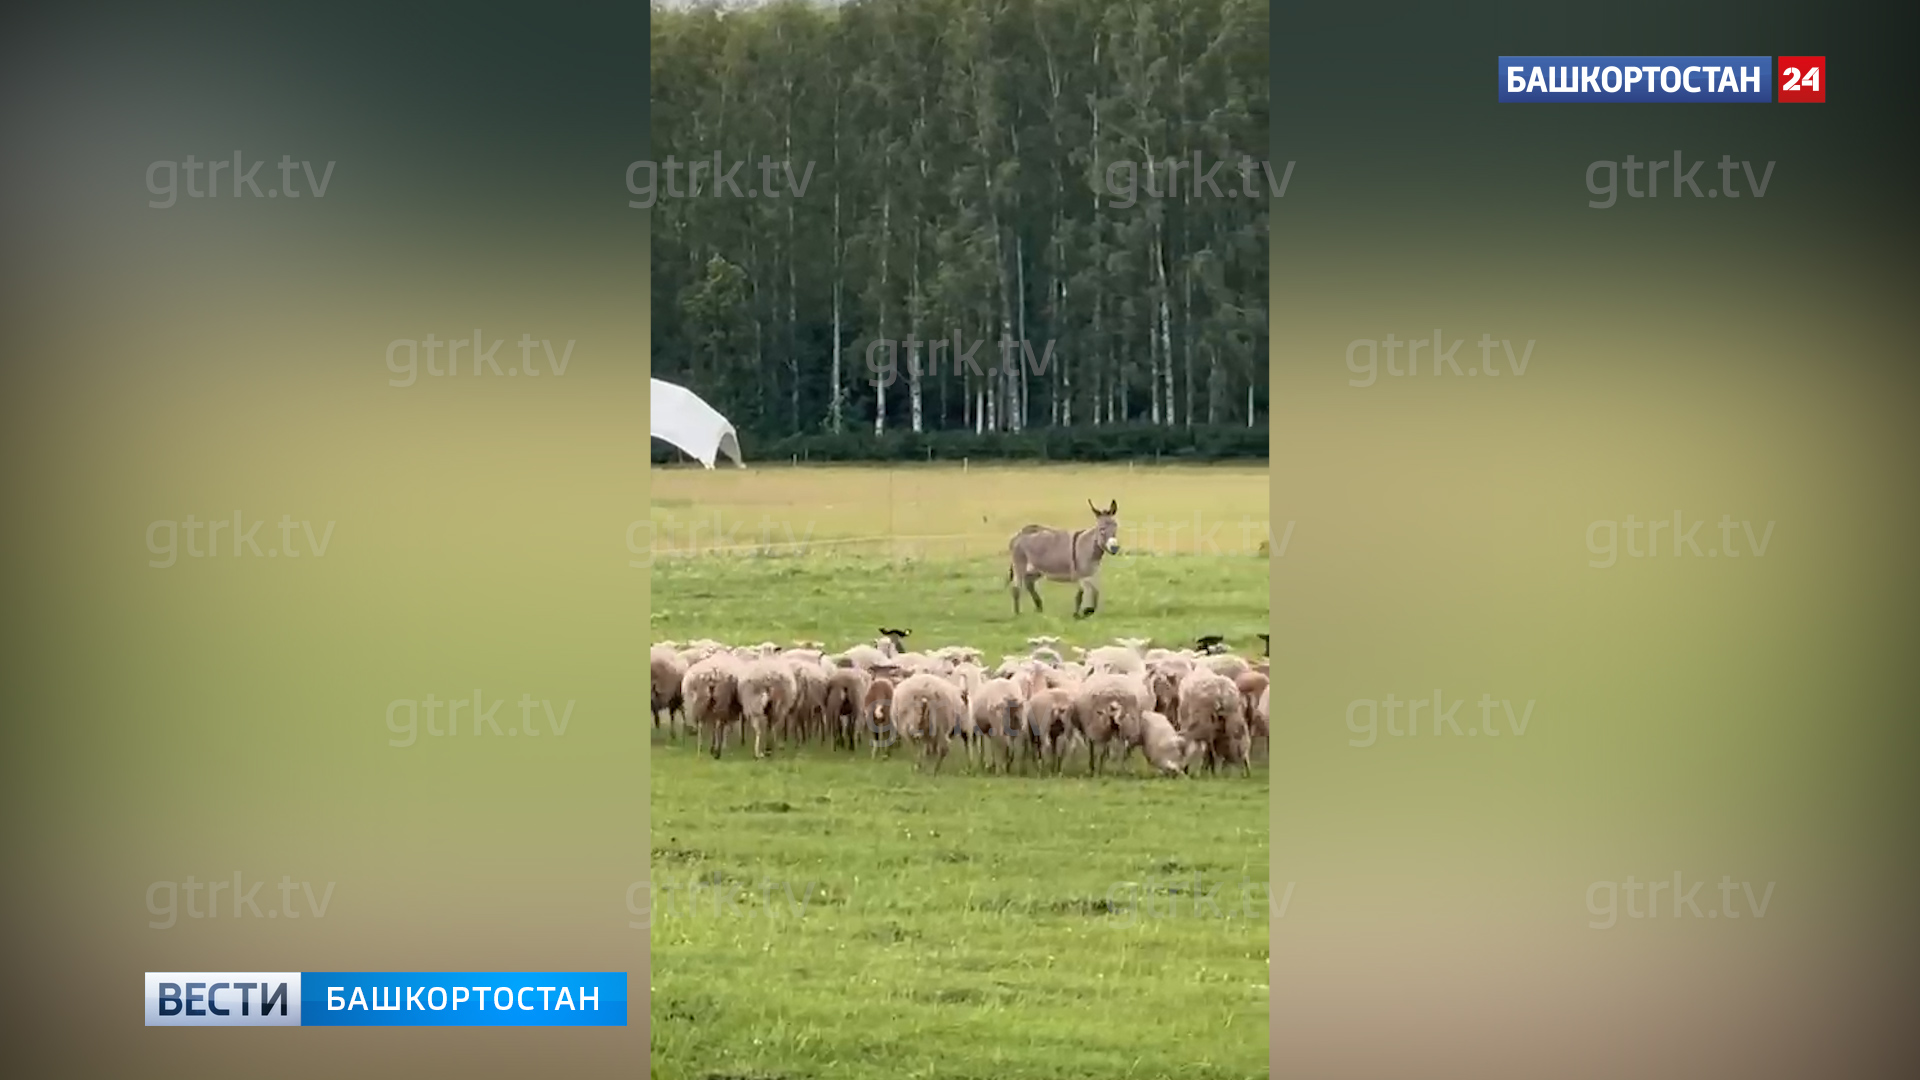 В Башкирии сняли на видео ослицу, пасущую стадо овец